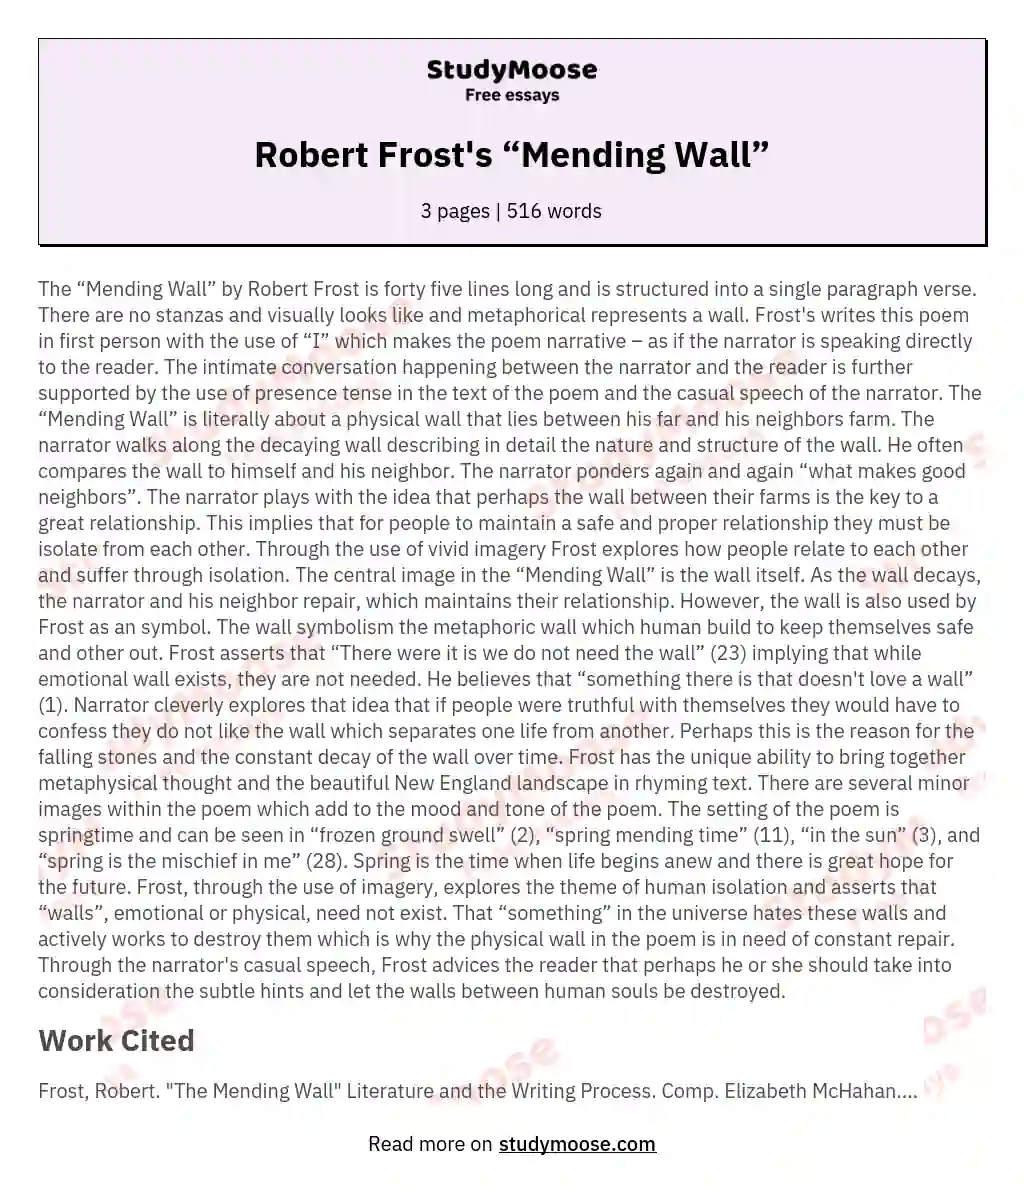 Robert Frost's “Mending Wall” essay